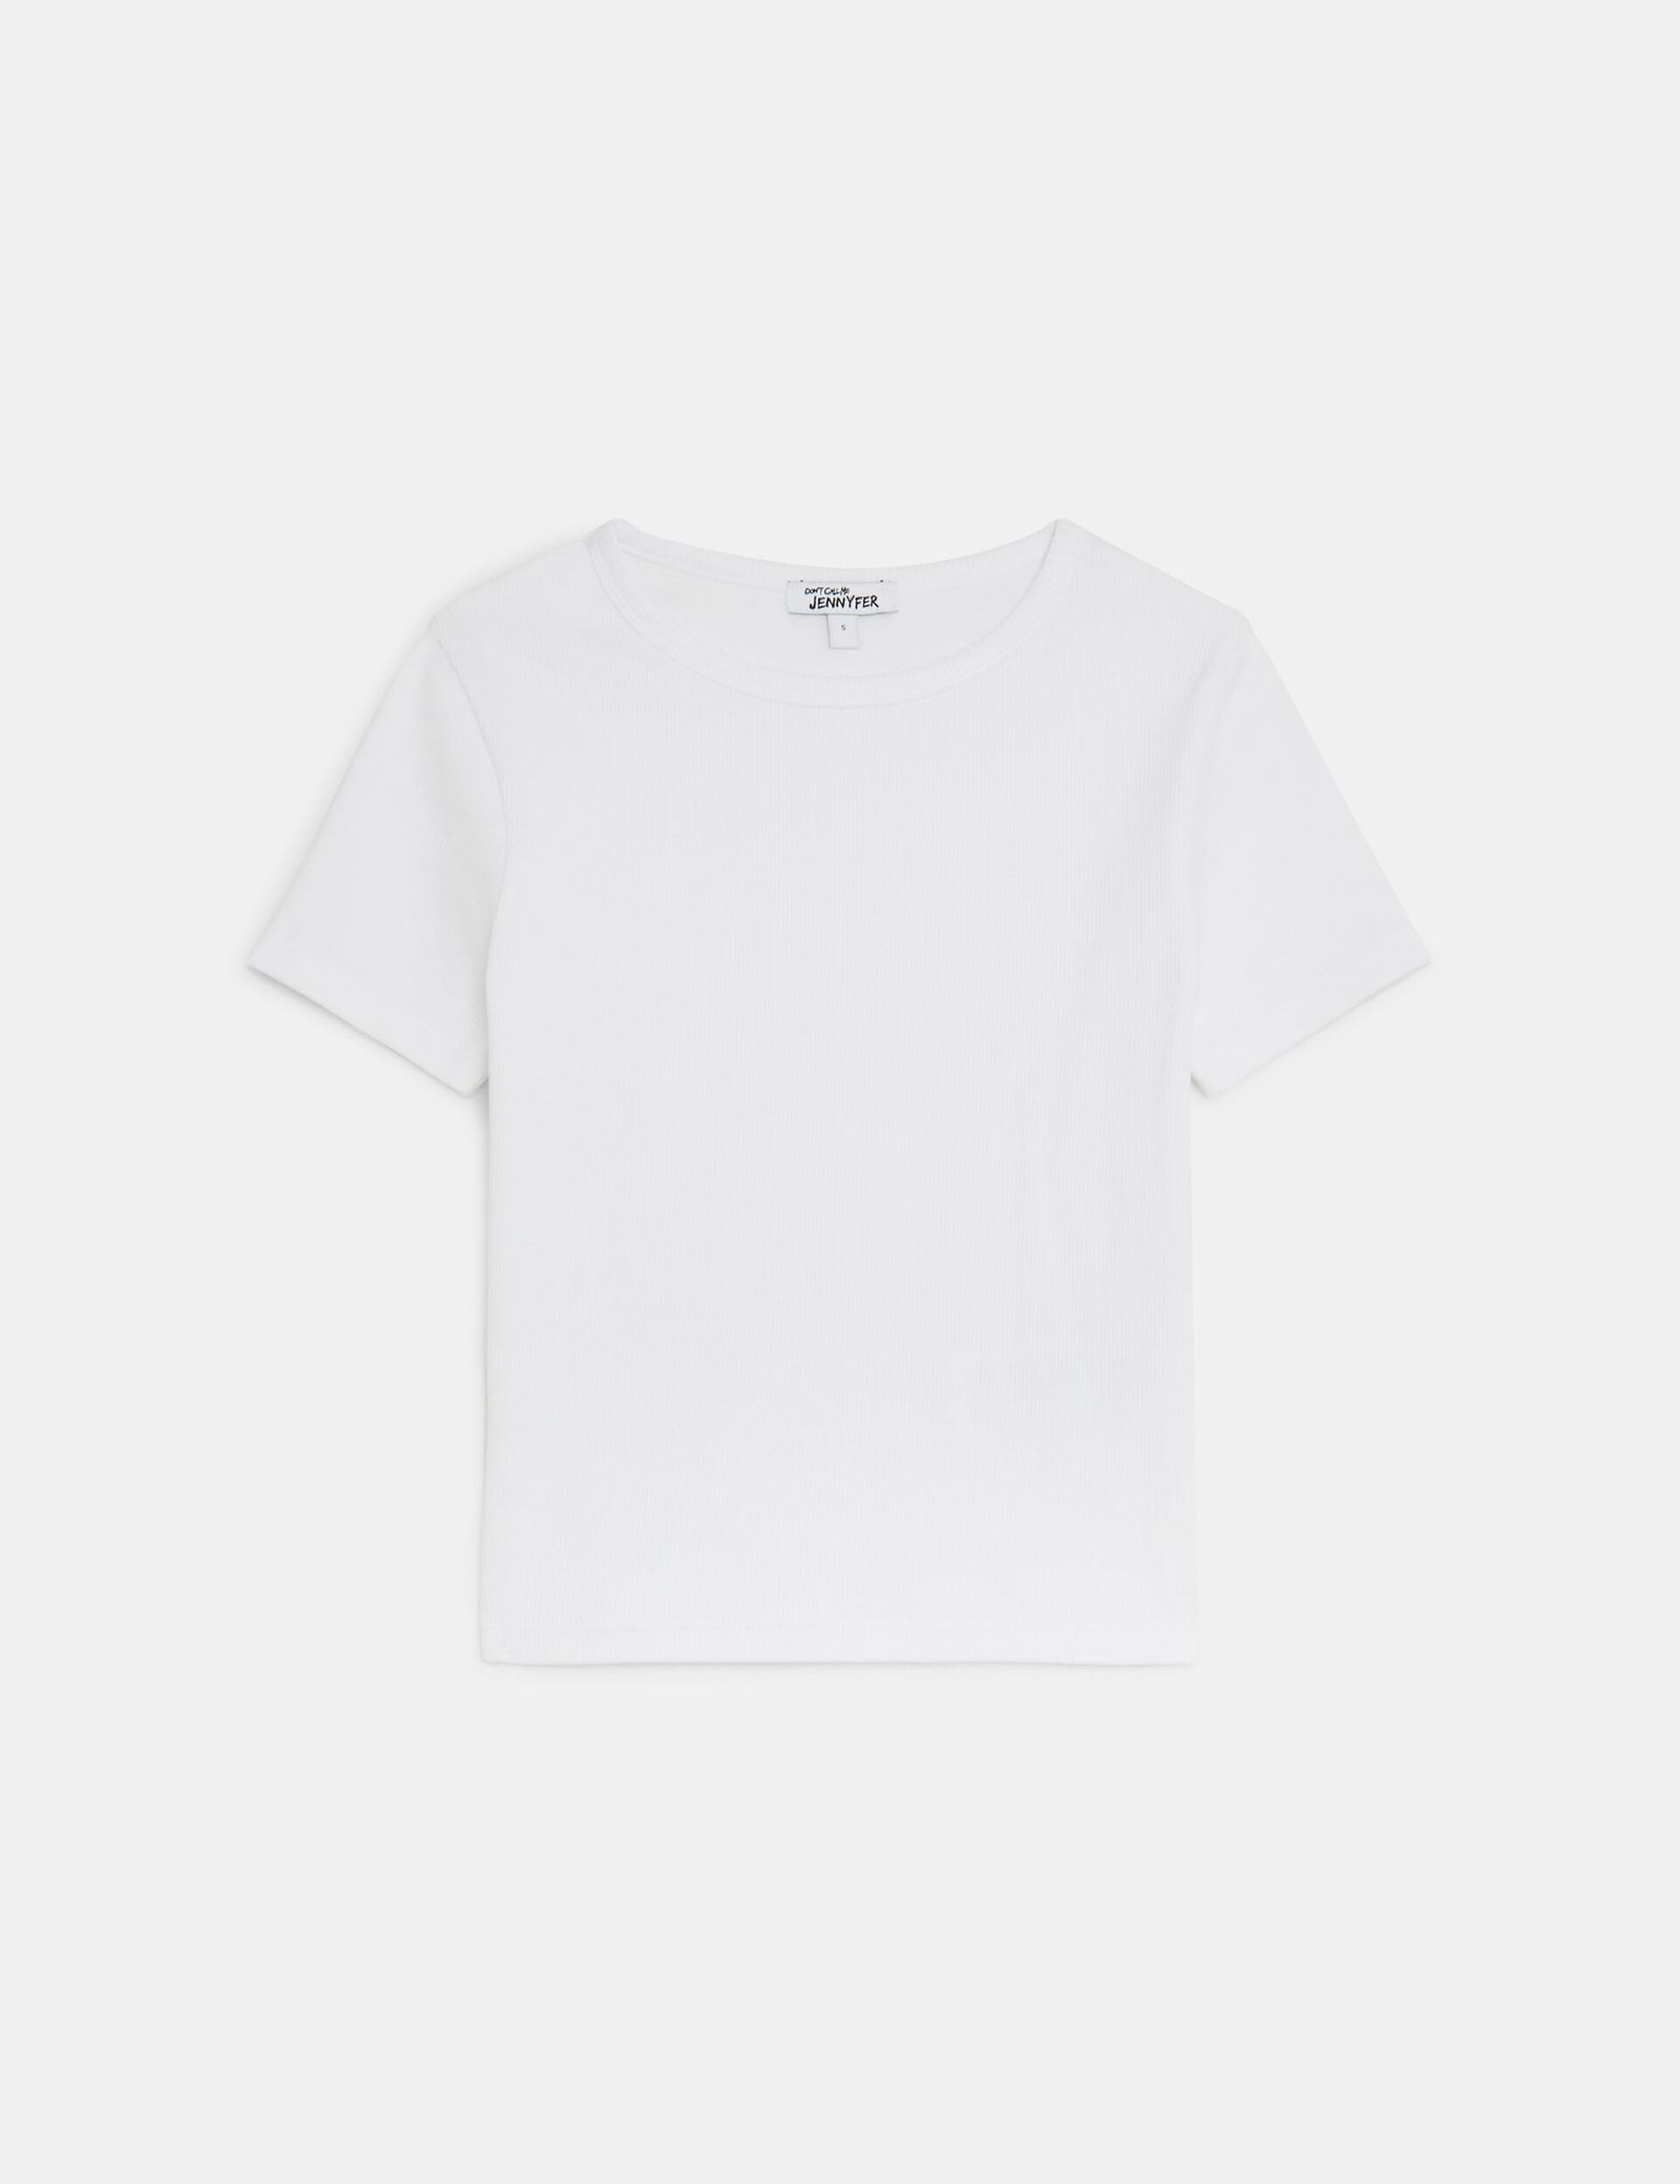 Tee-shirt basic blanc côtelée